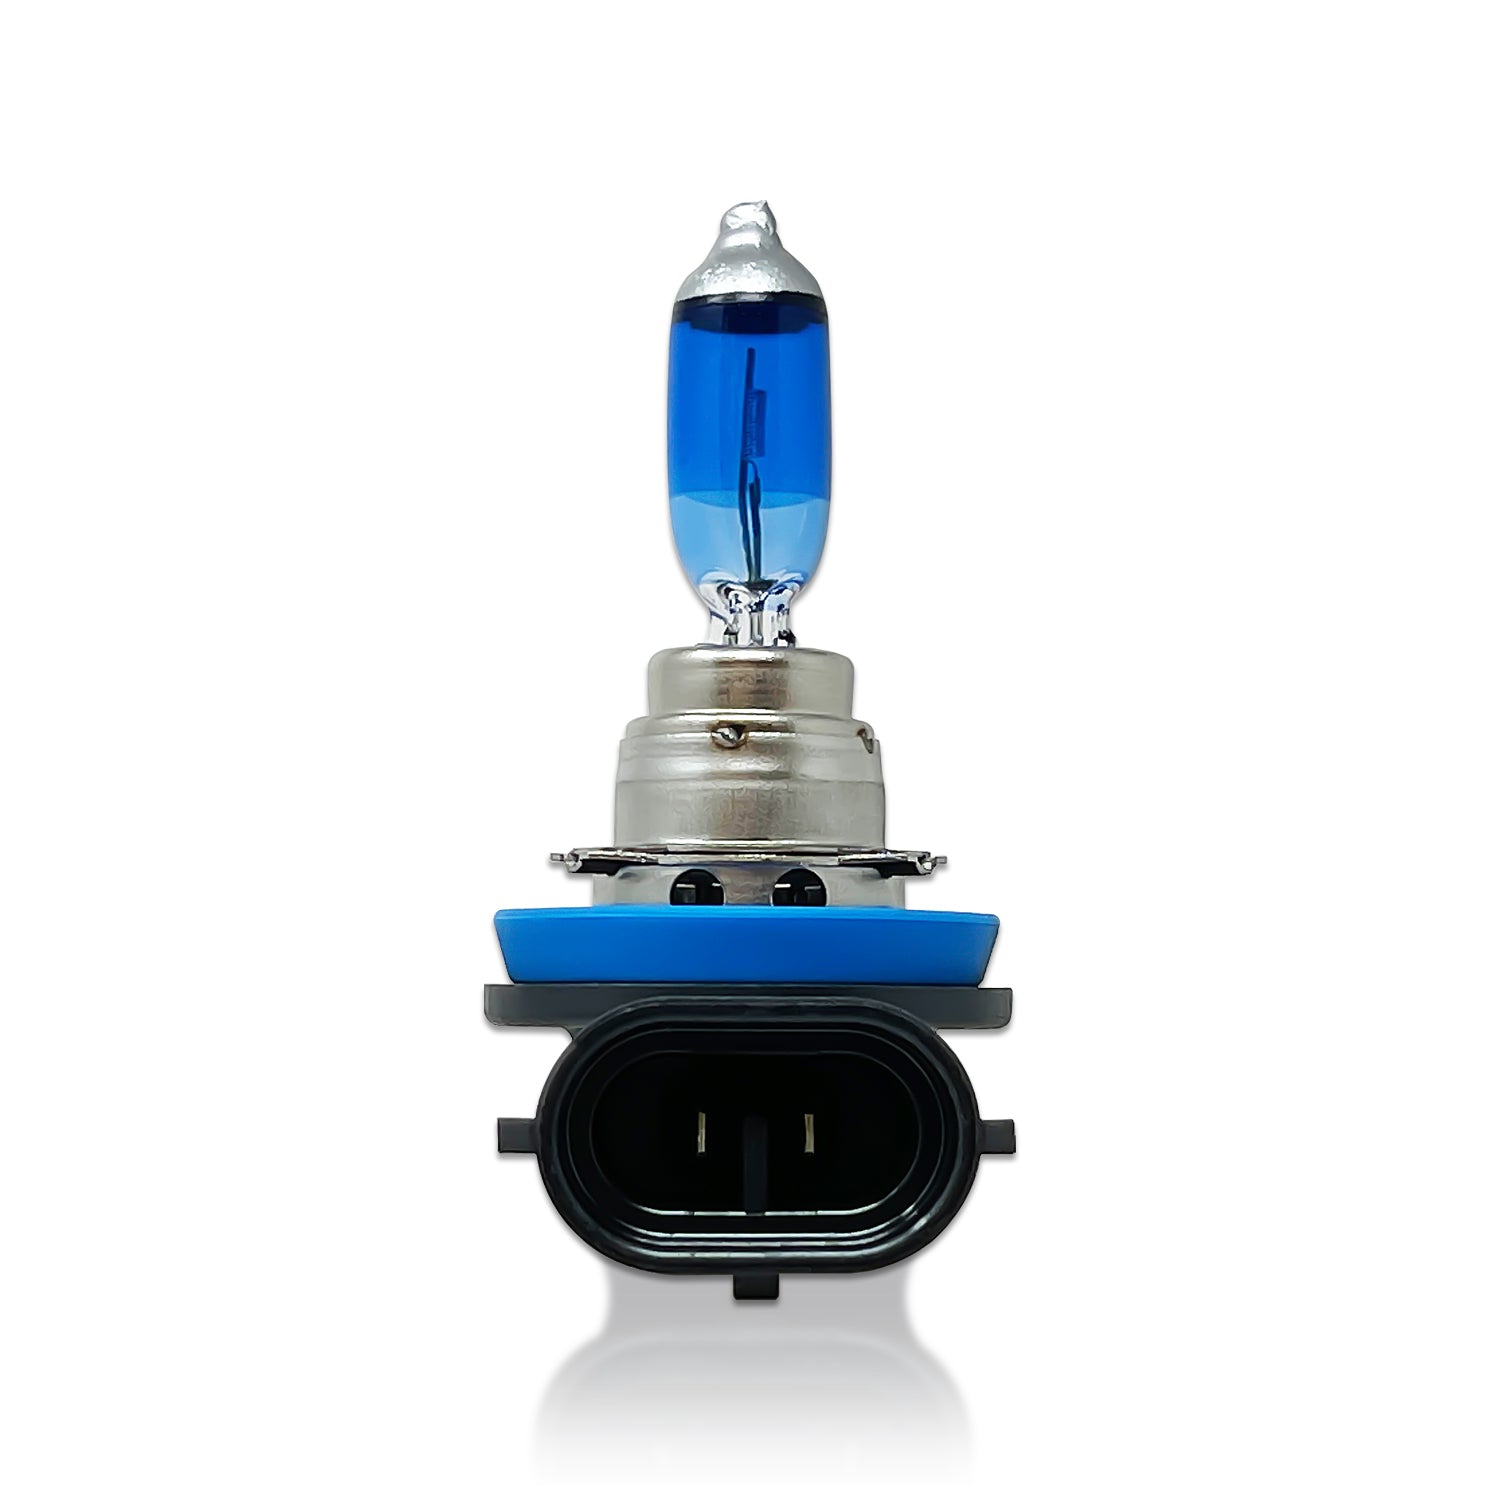 H11 Halogen: Osram Cool Blue Boost Halogen Bulbs